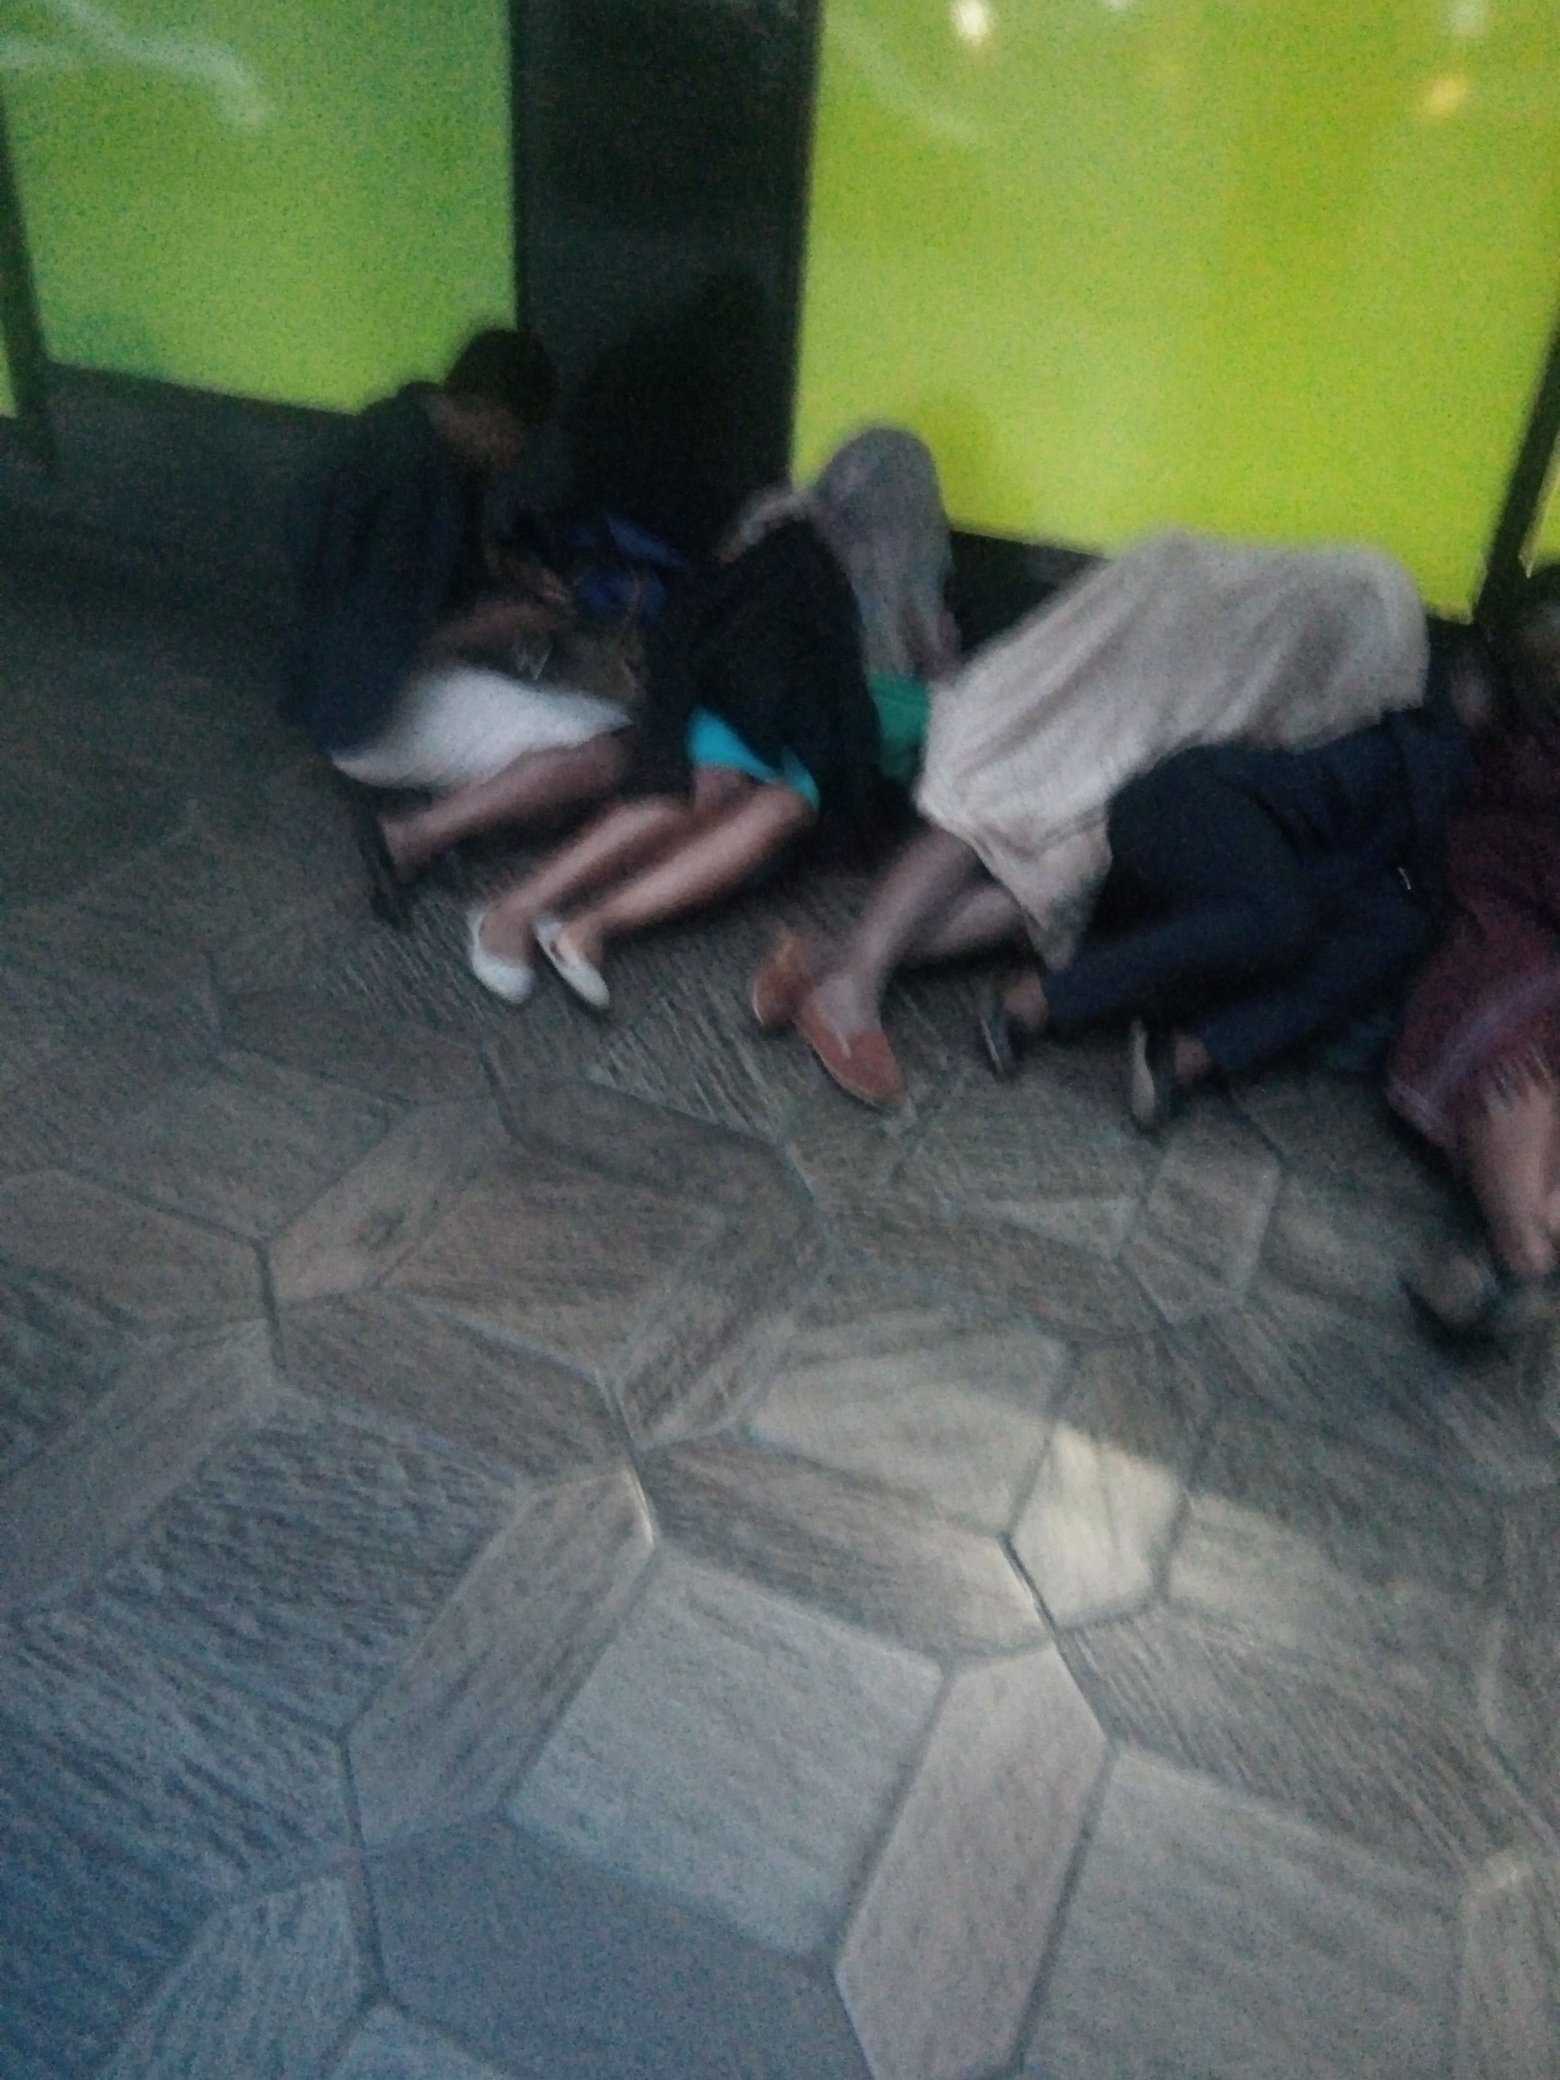 Bank Workers Sleep In The Street